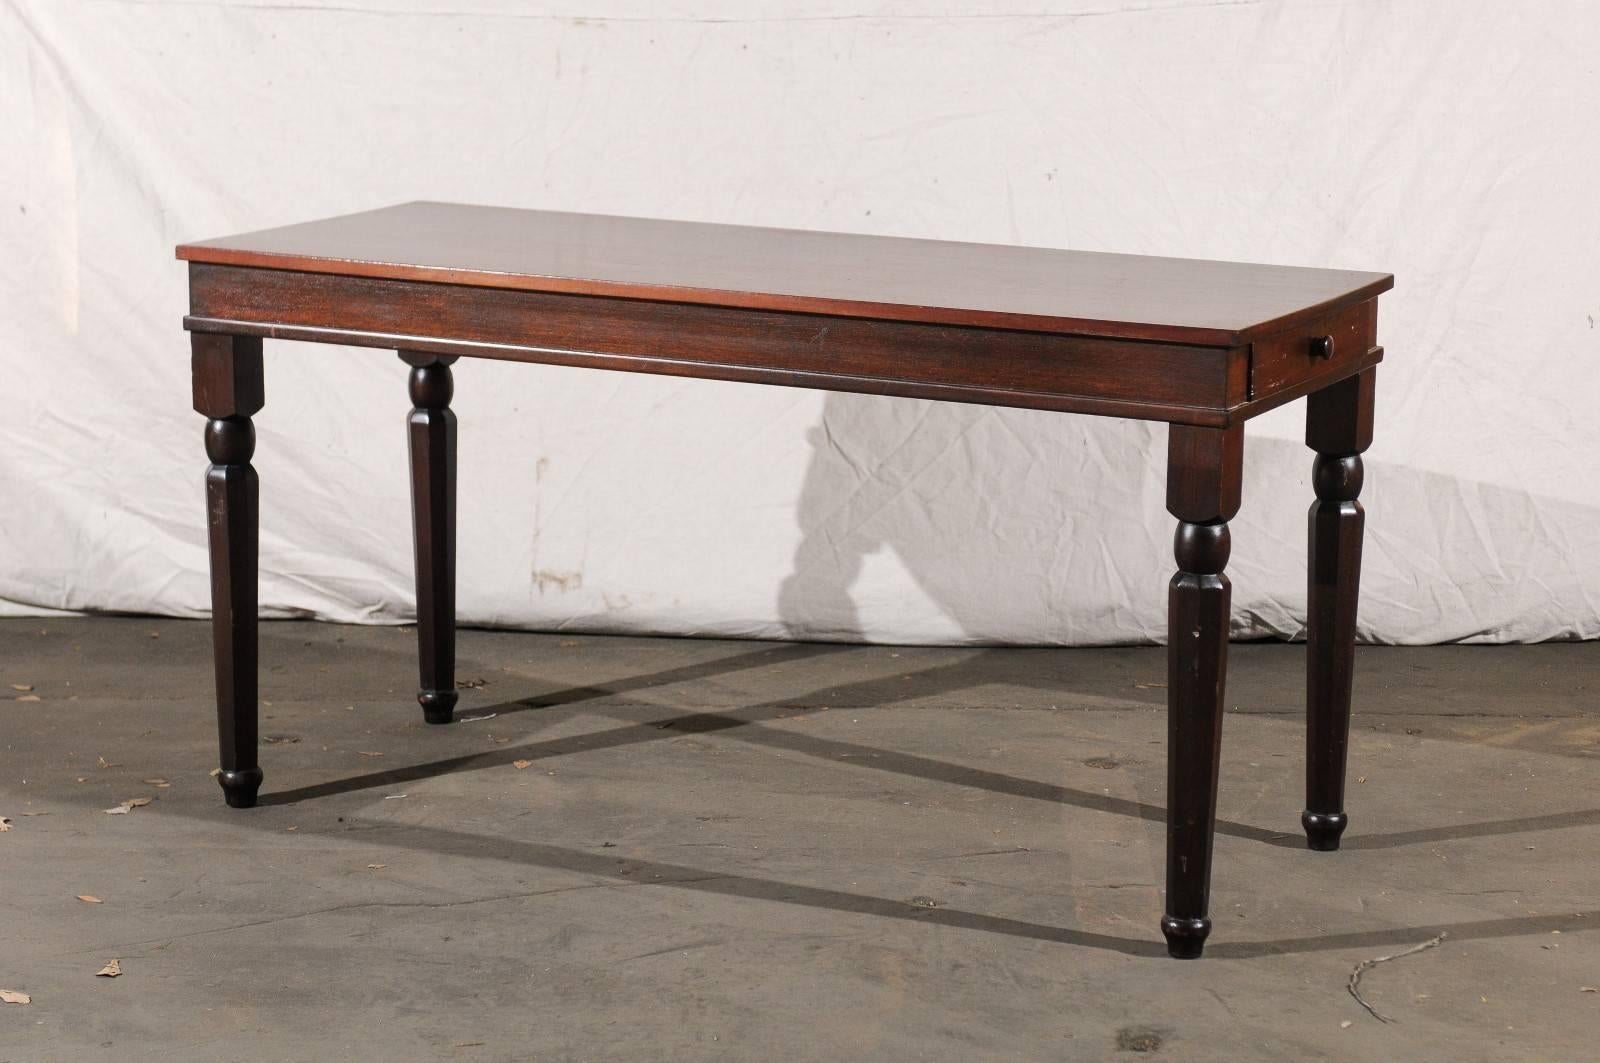 Charming 19th century long English mahogany table with single drawer.